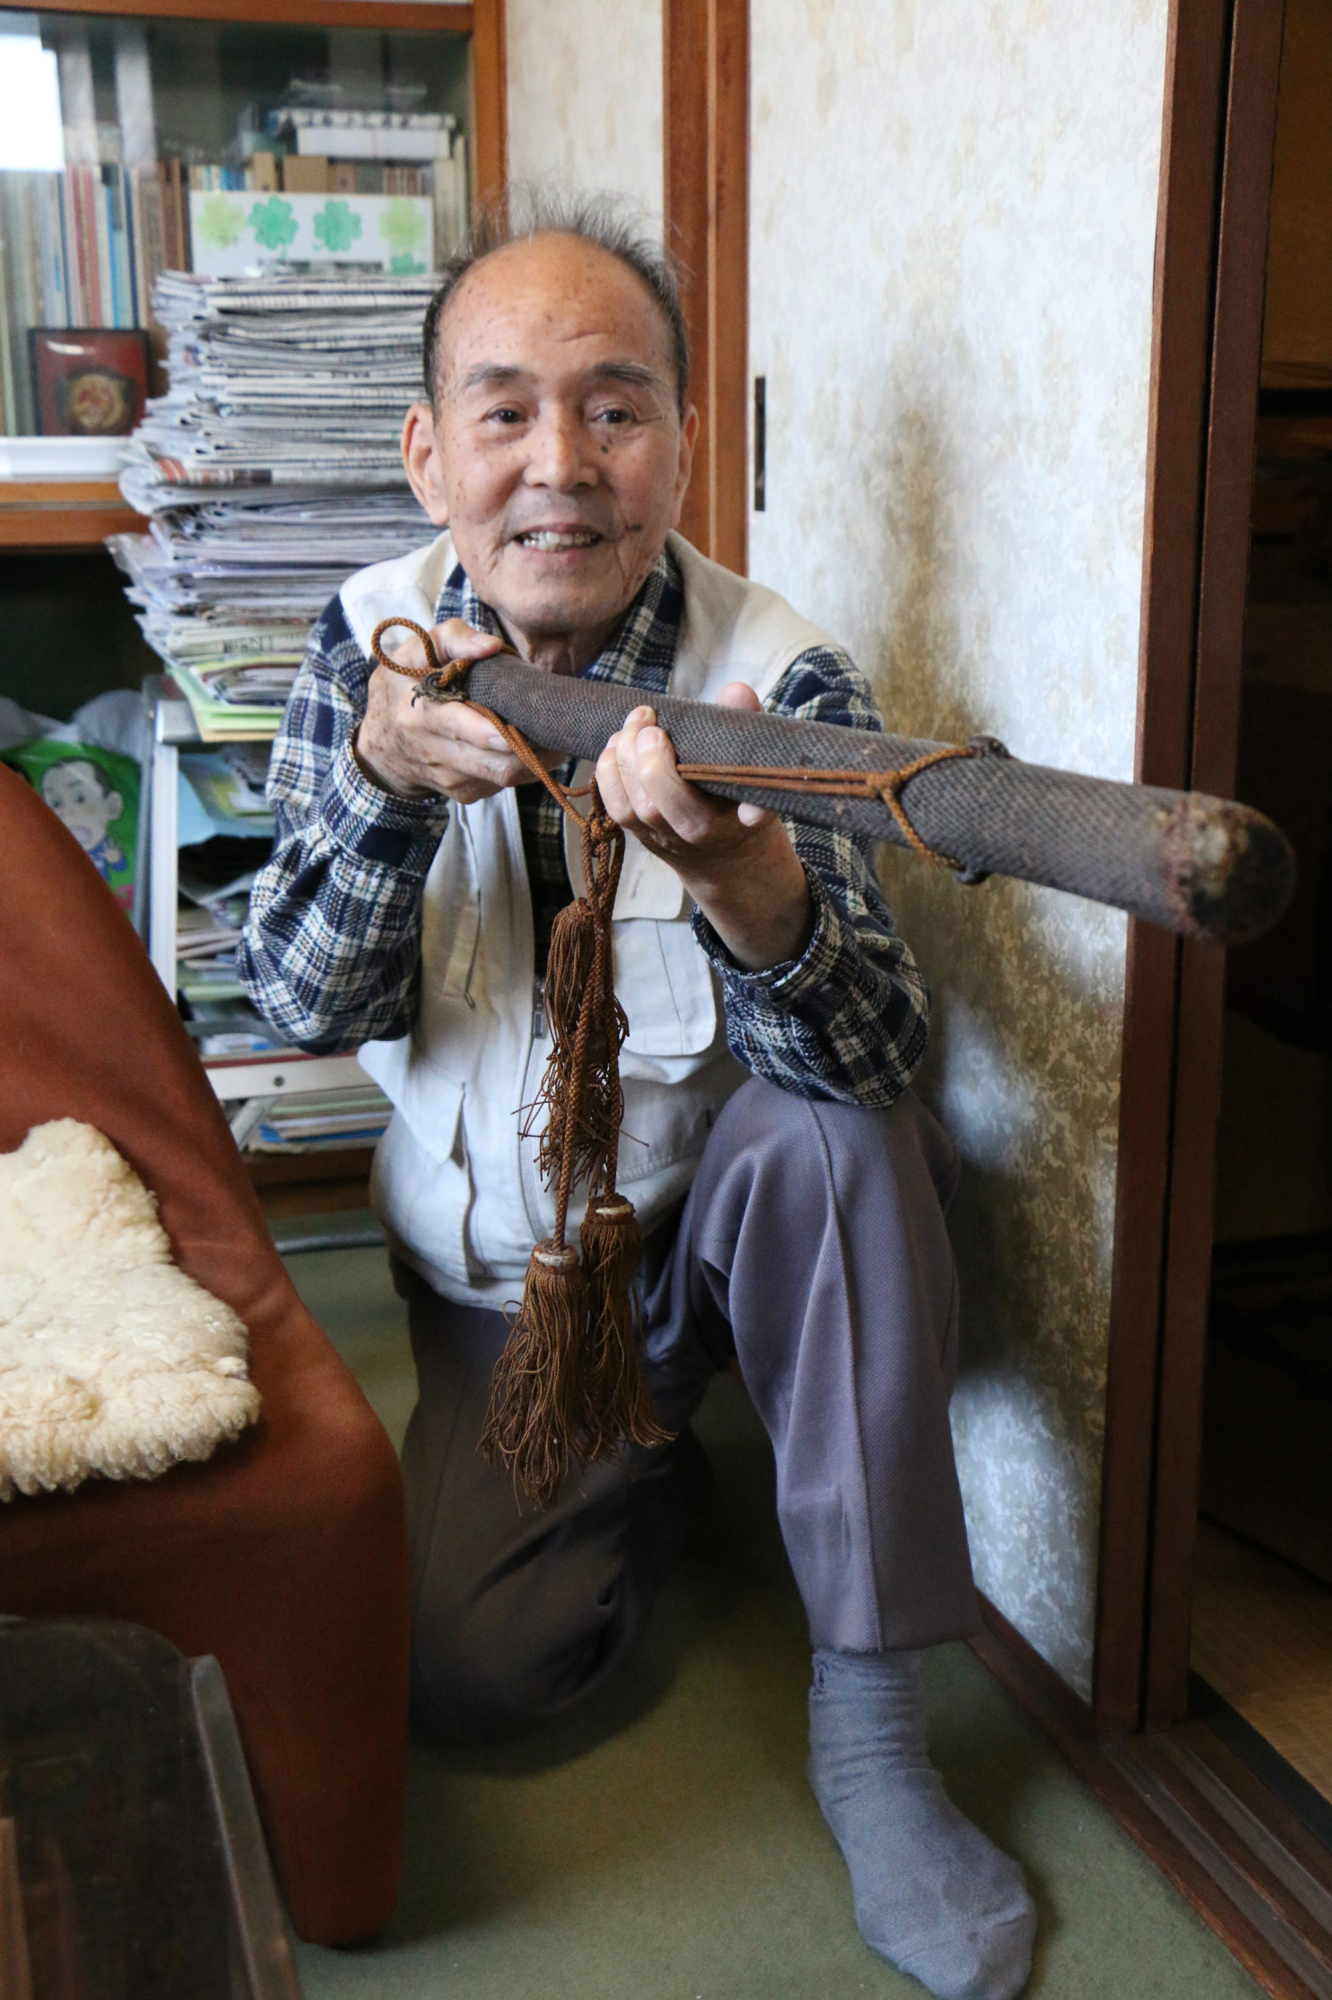 World War II practice bayonets discovered, evoking memories of Japan's ...